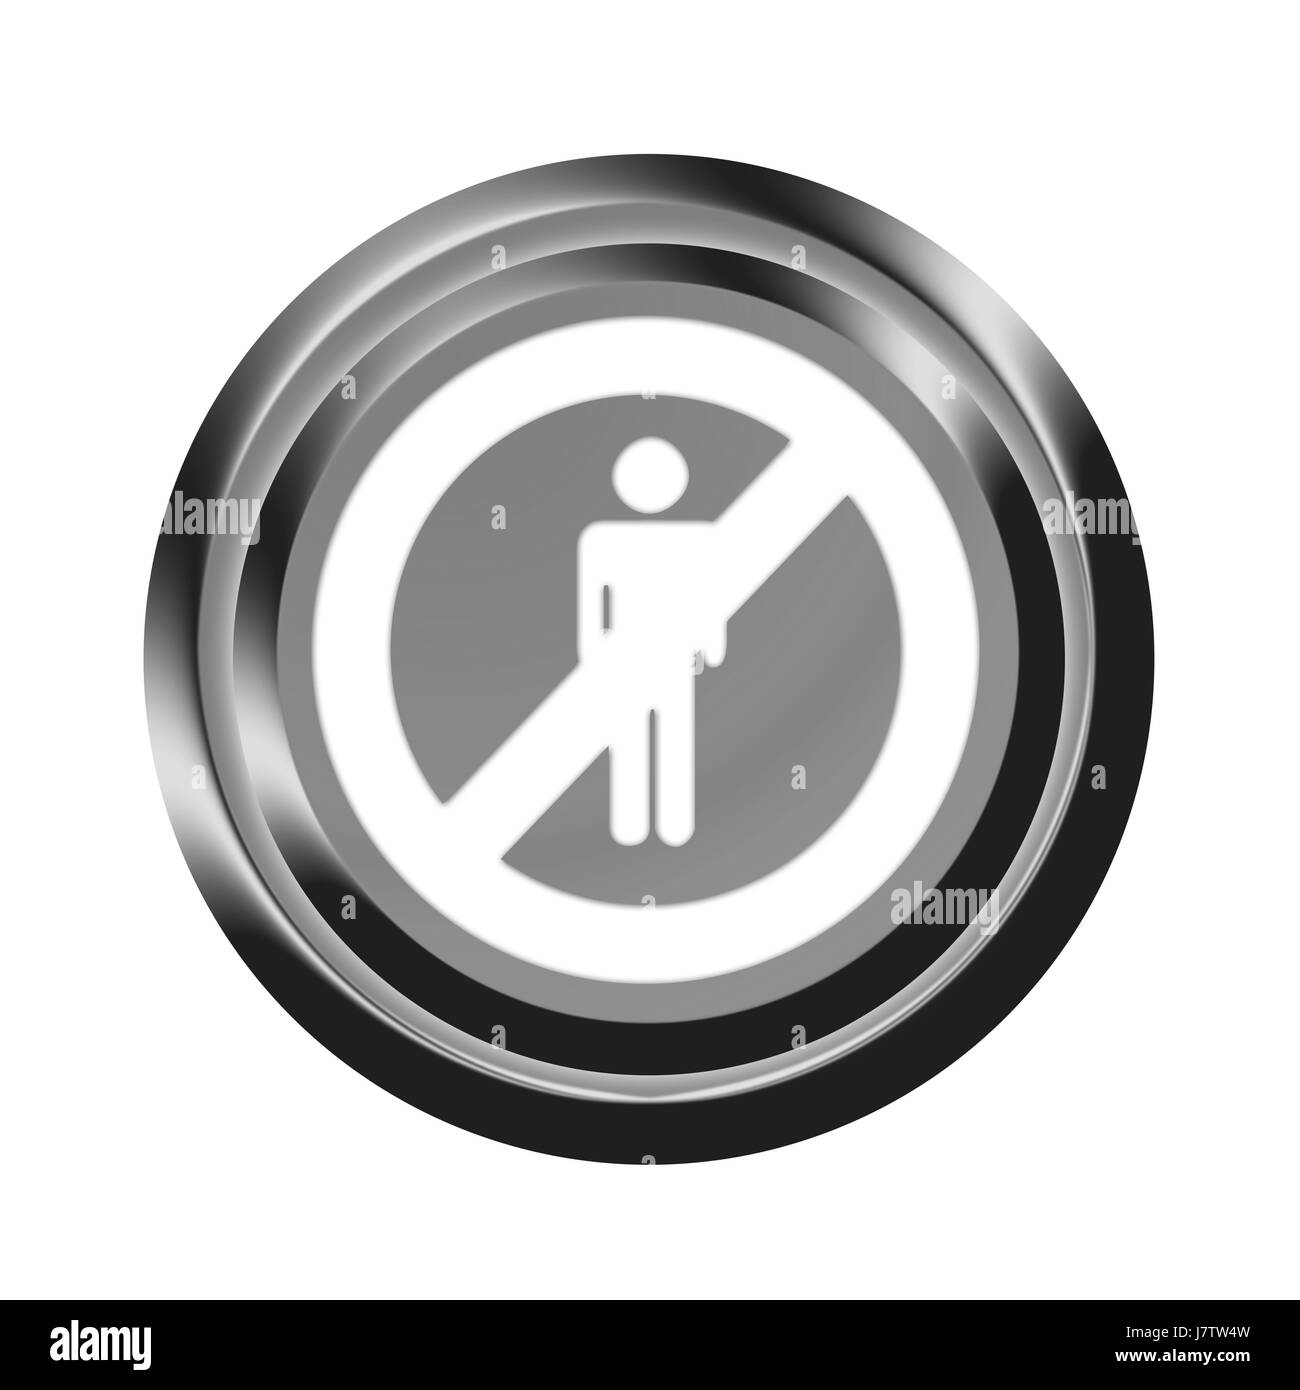 Ziel Durchgang Tor Archgway Gantry Taste Symbolik Verbot illegaler verbotene Stopp Stockfoto